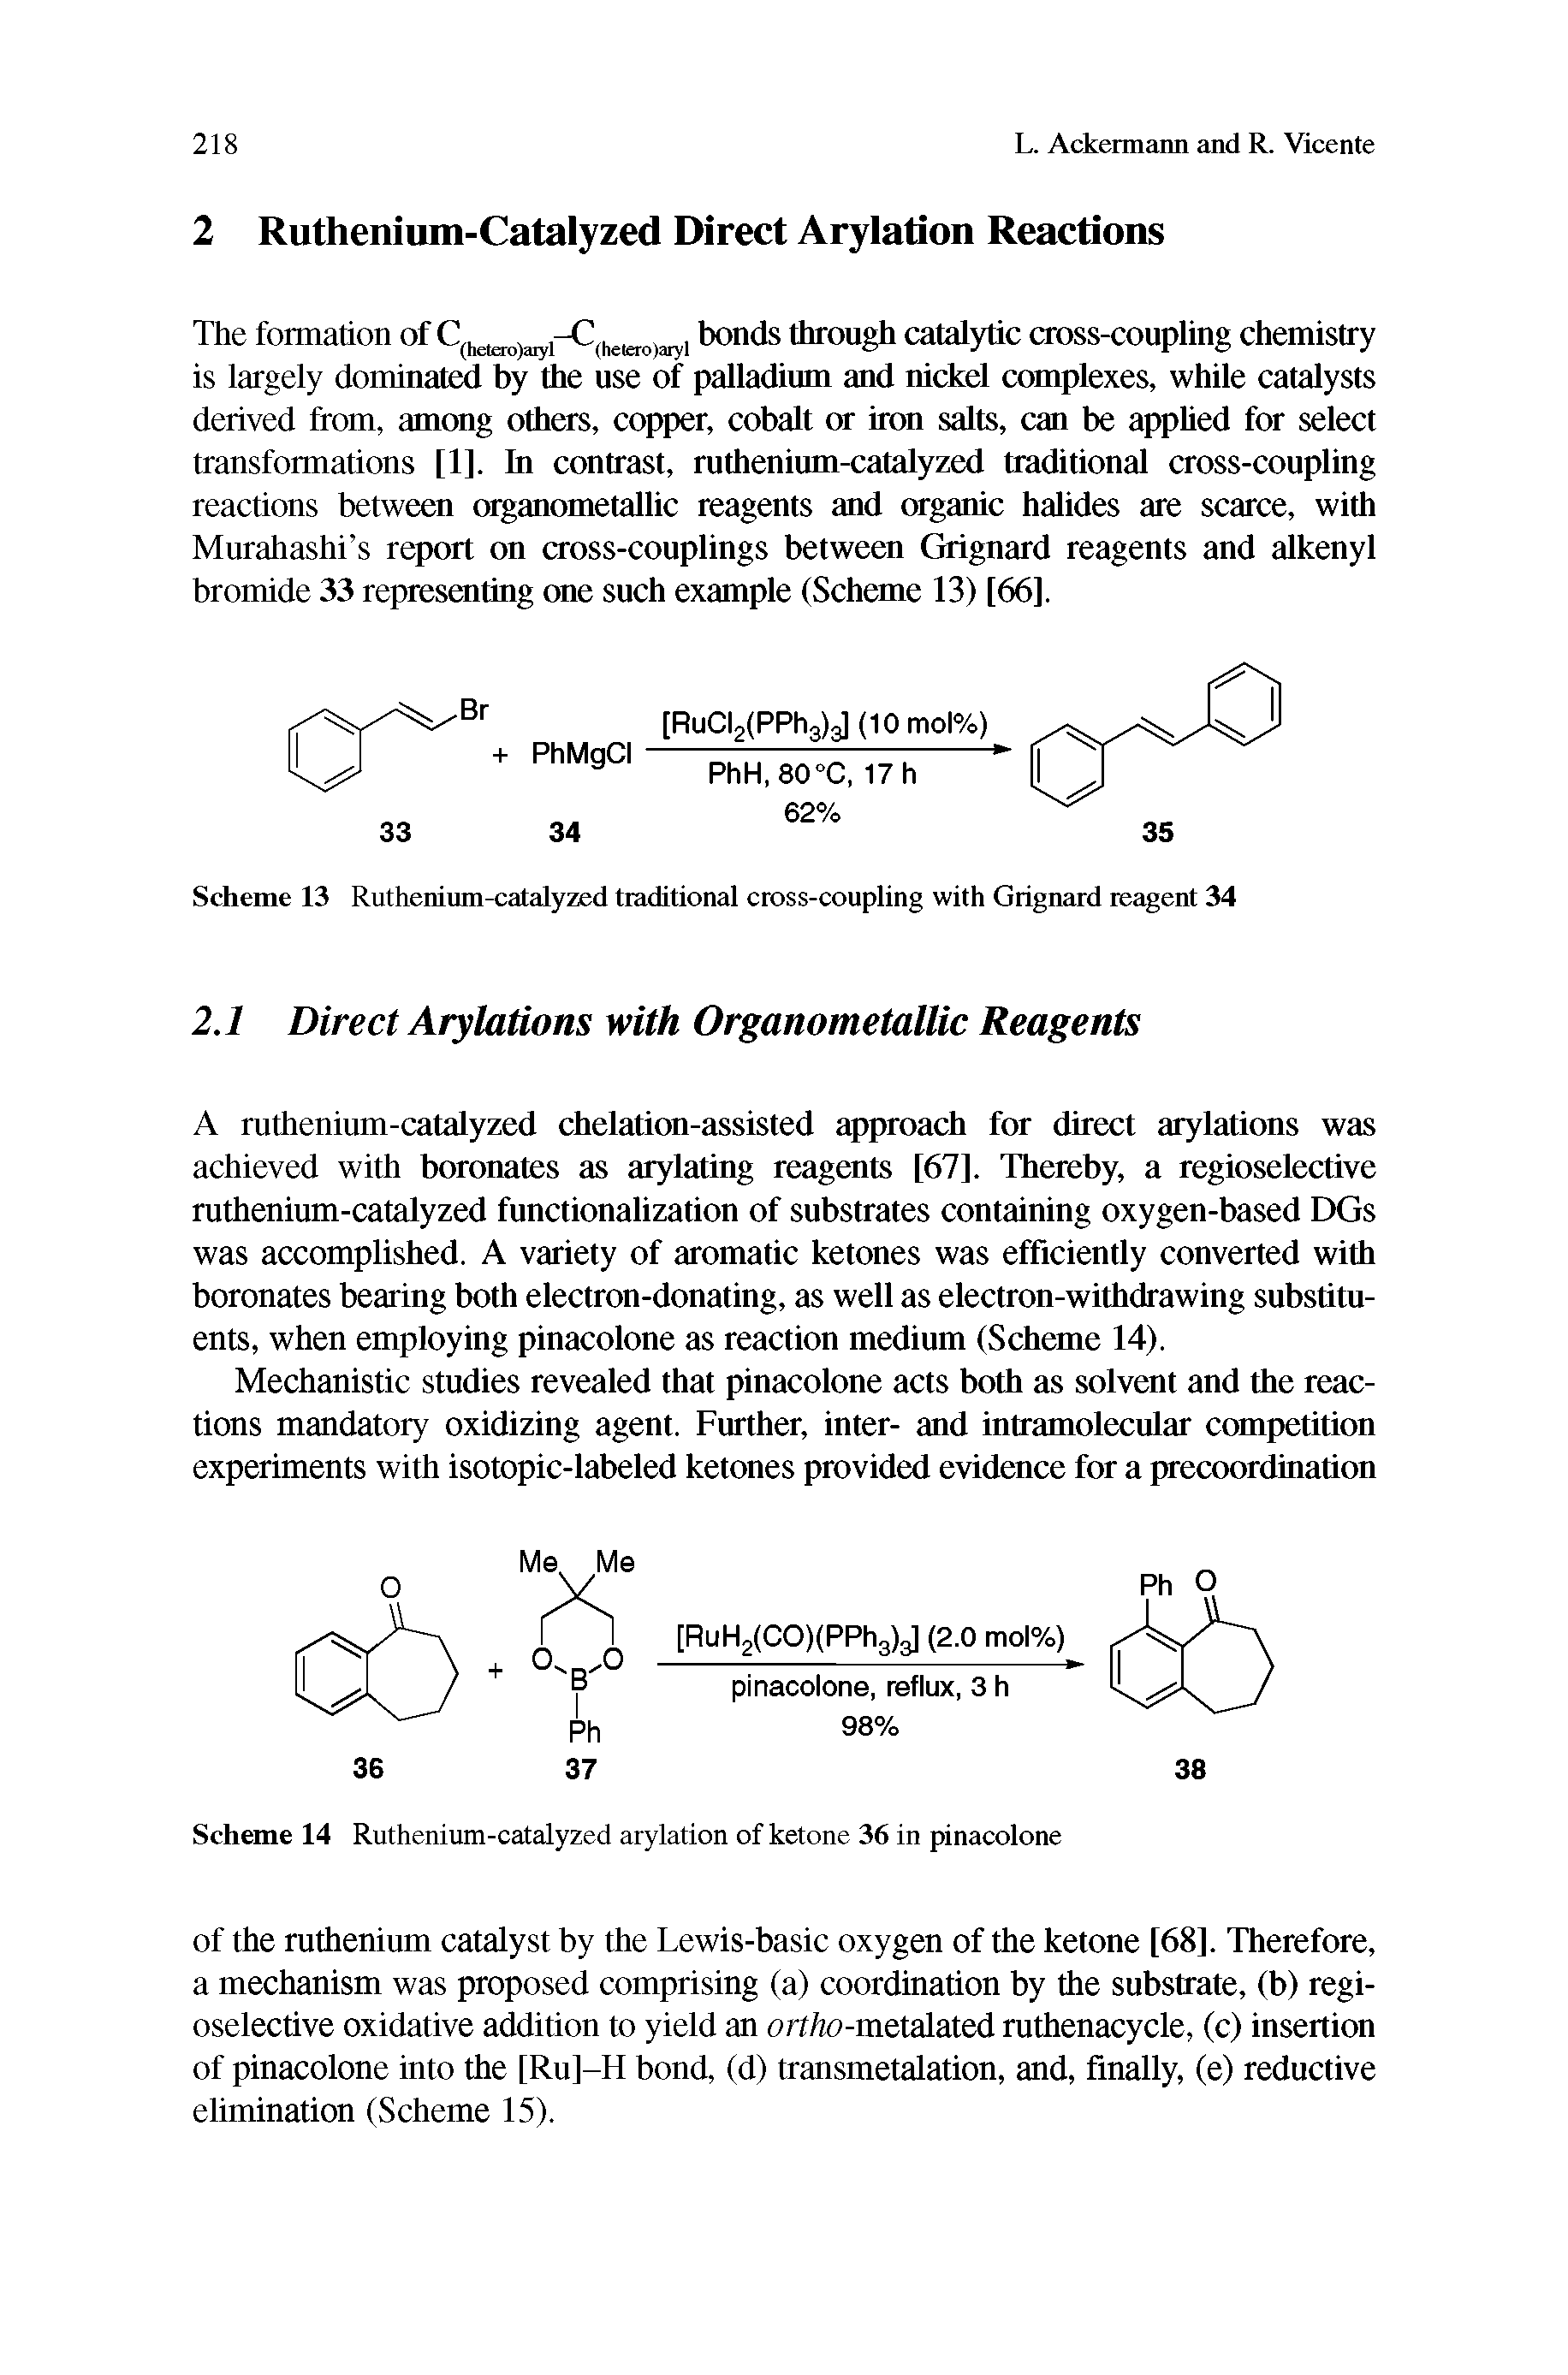 Scheme 14 Ruthenium-catalyzed arylation of ketone 36 in pinacolone...